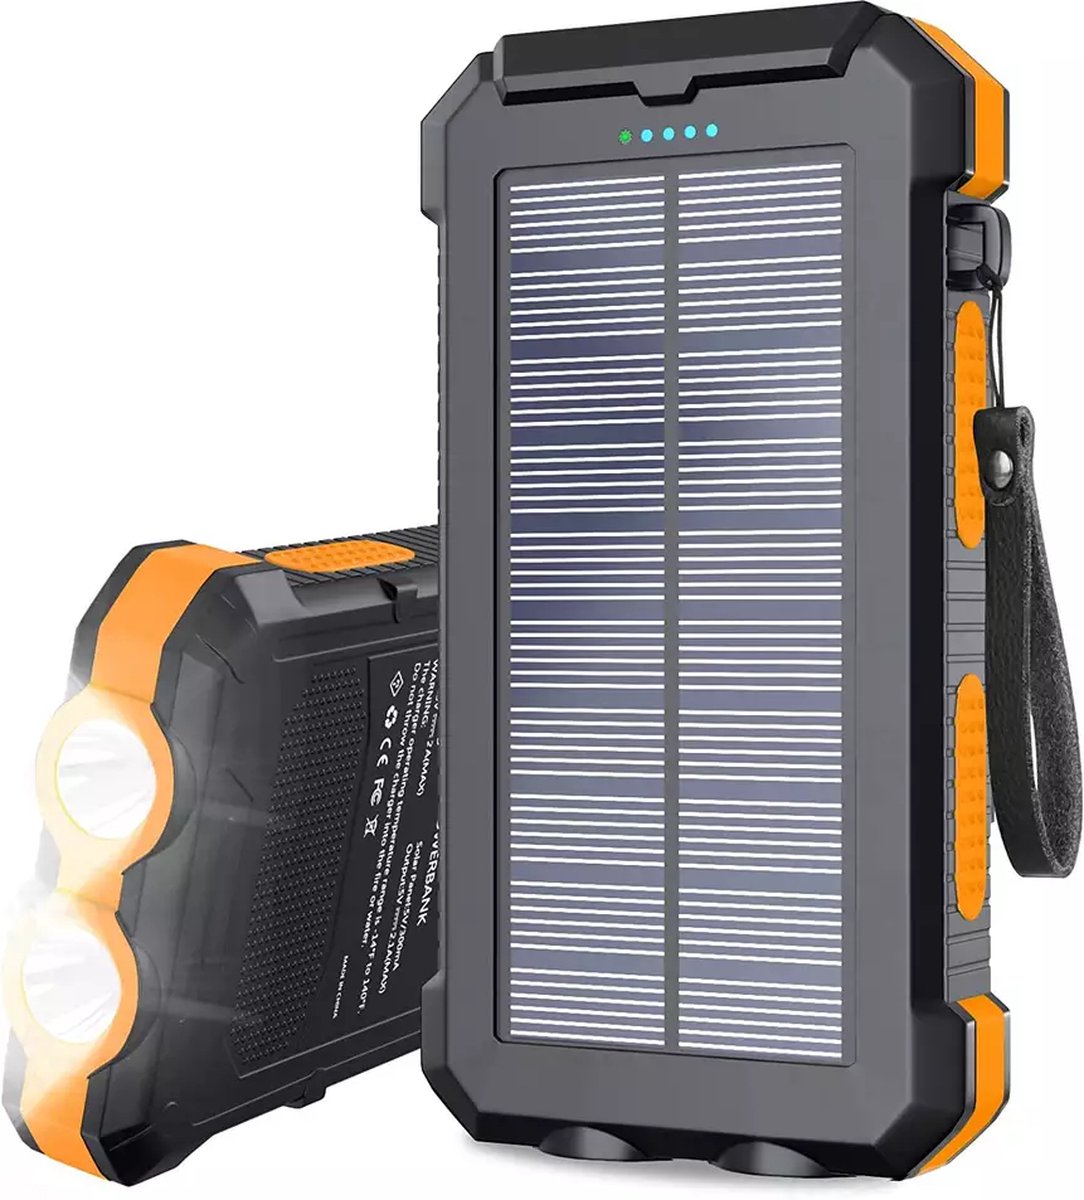 Solar Powerbank 30000mAh - Solar Charger - Waterdicht - iPhone & Samsung - Zonne-energie - Kompas - 2x USB - Micro USB + USB-C - Oranje